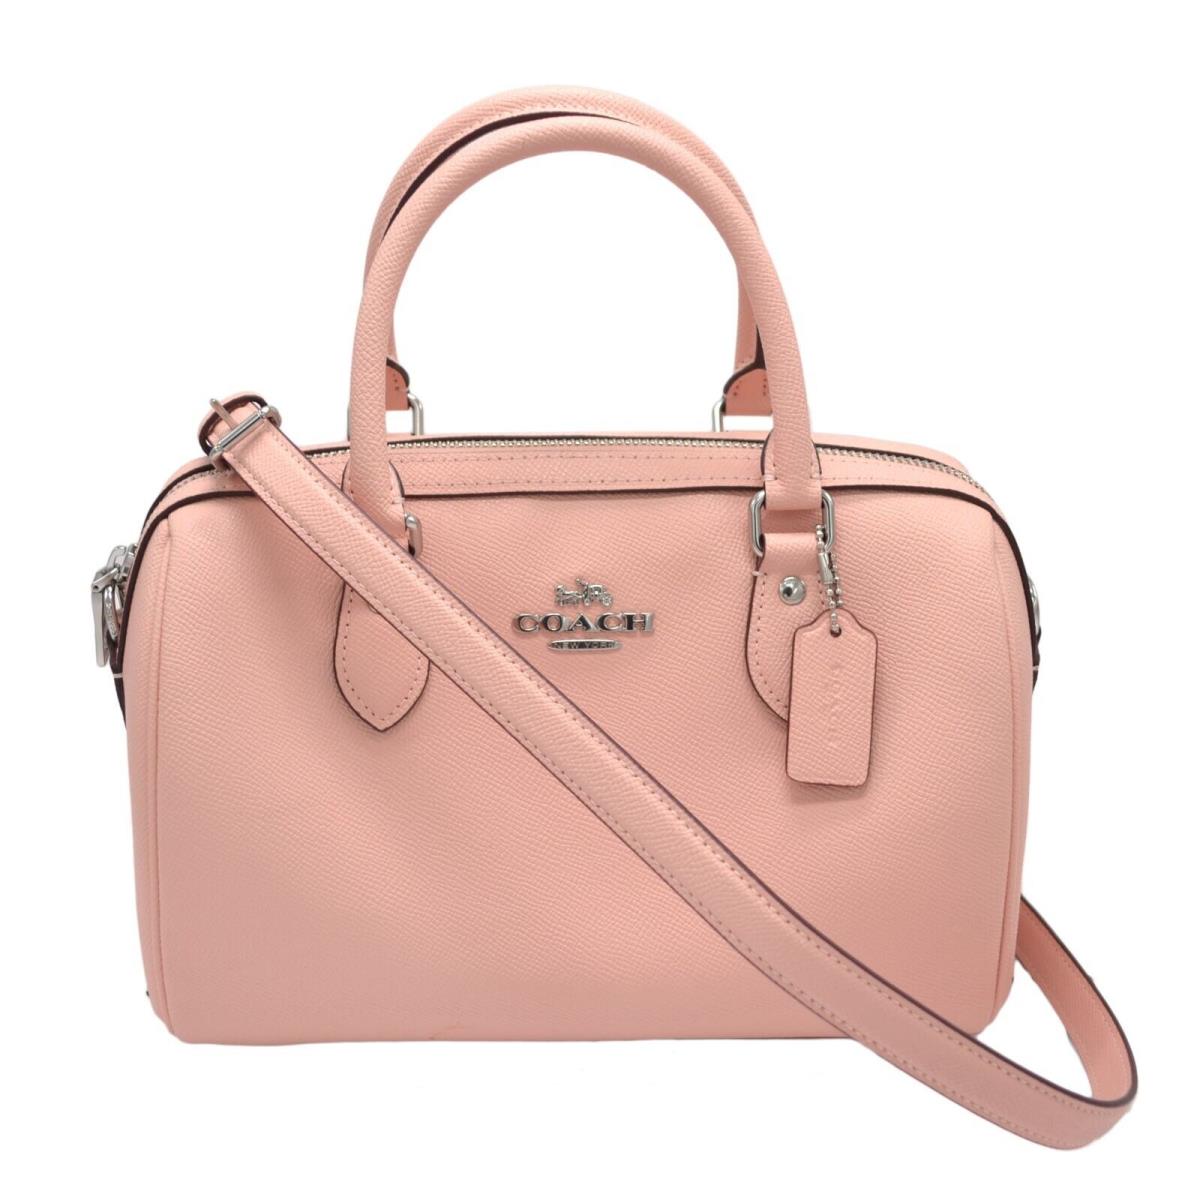 Coach Women`s Rowan Satchel Purse Crossbody Leather Handbag Light Pink - Handle/Strap: Pink, Hardware: Silver, Exterior: Light Pink